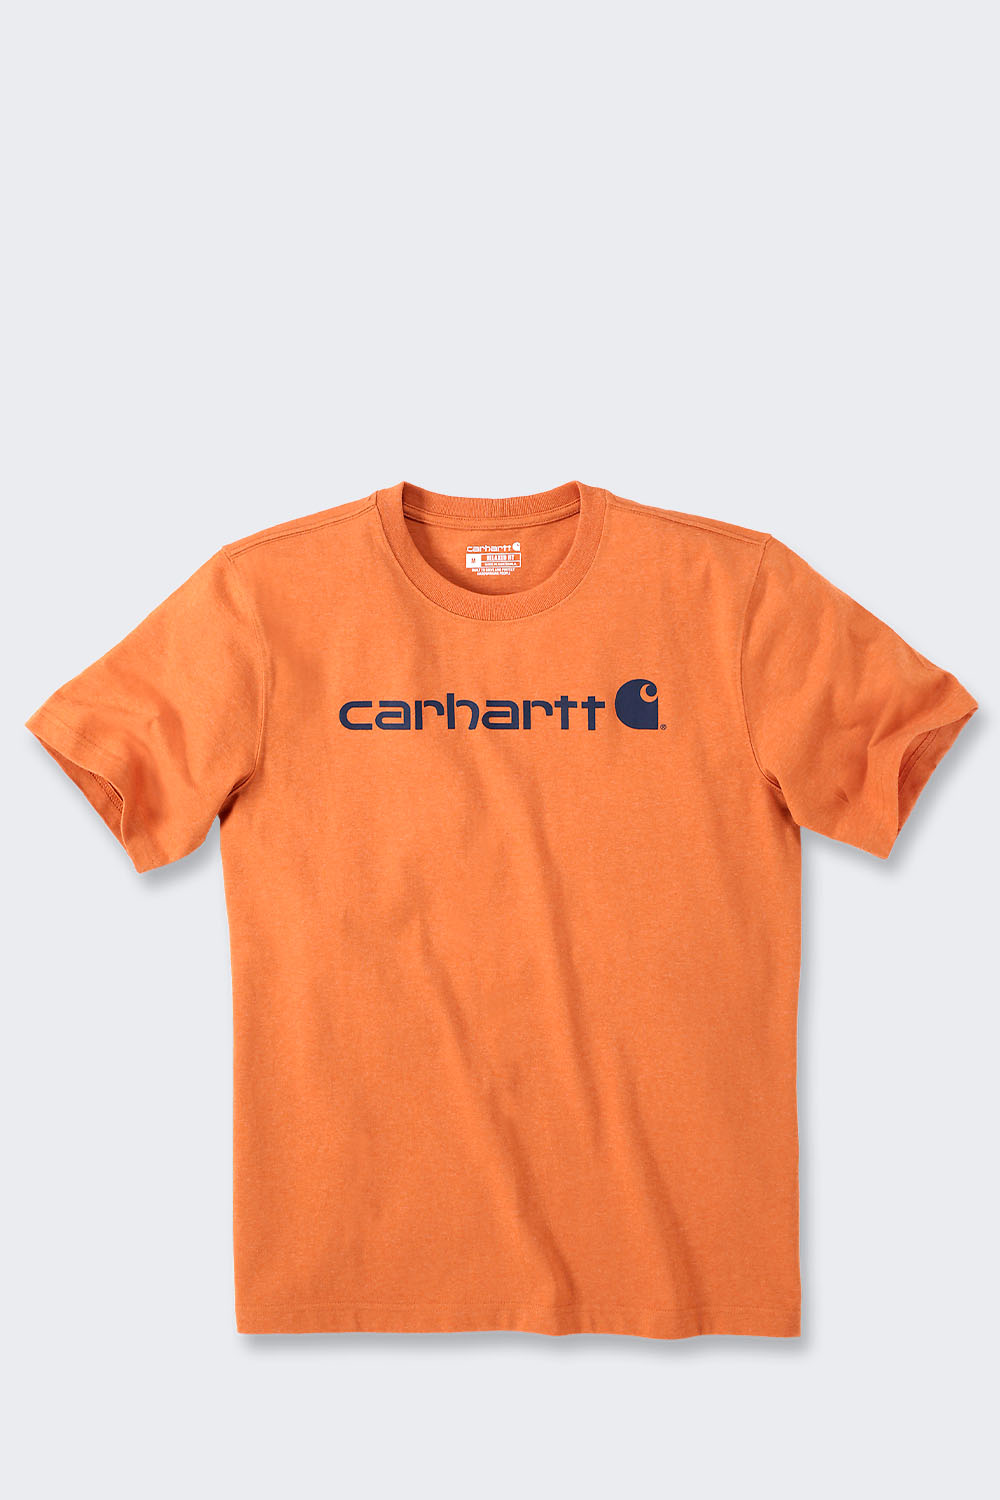 Koszulka Carhartt Core Logo Marmalade